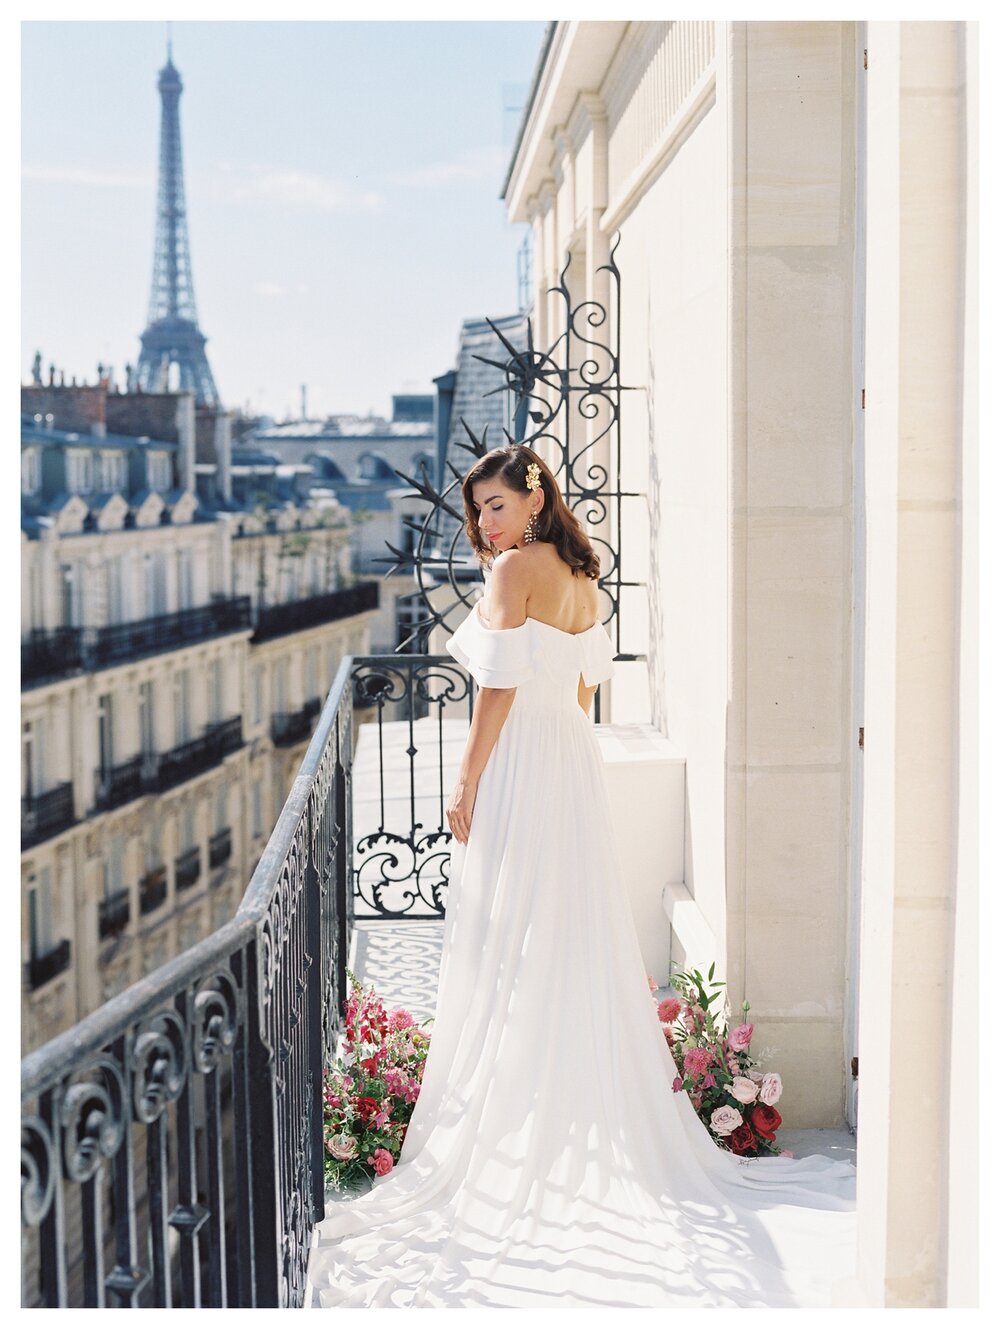  Bride on Paris balcony with eiffel tower view, Hotel Chateau Frontenac Paris wedding 